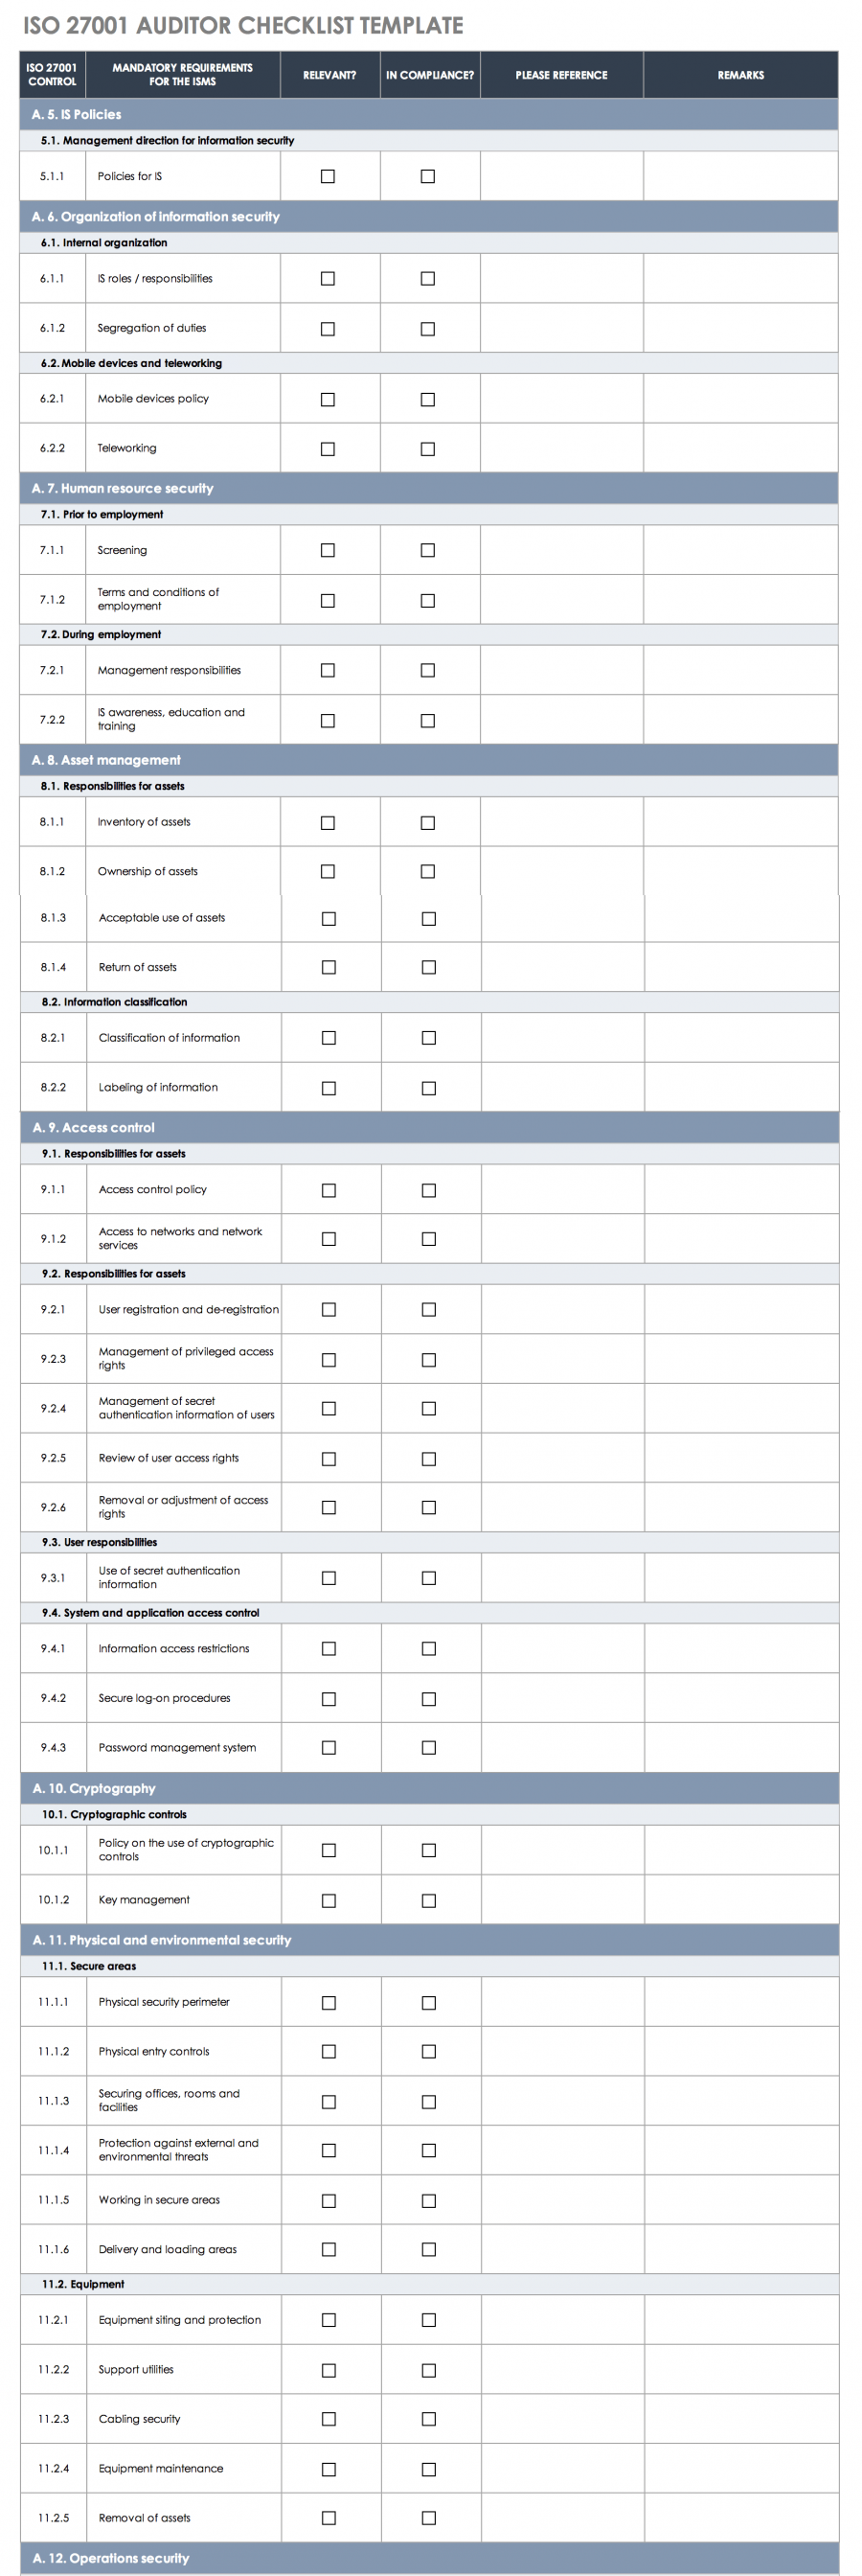 free-iso-27001-checklists-and-templates-smartsheet